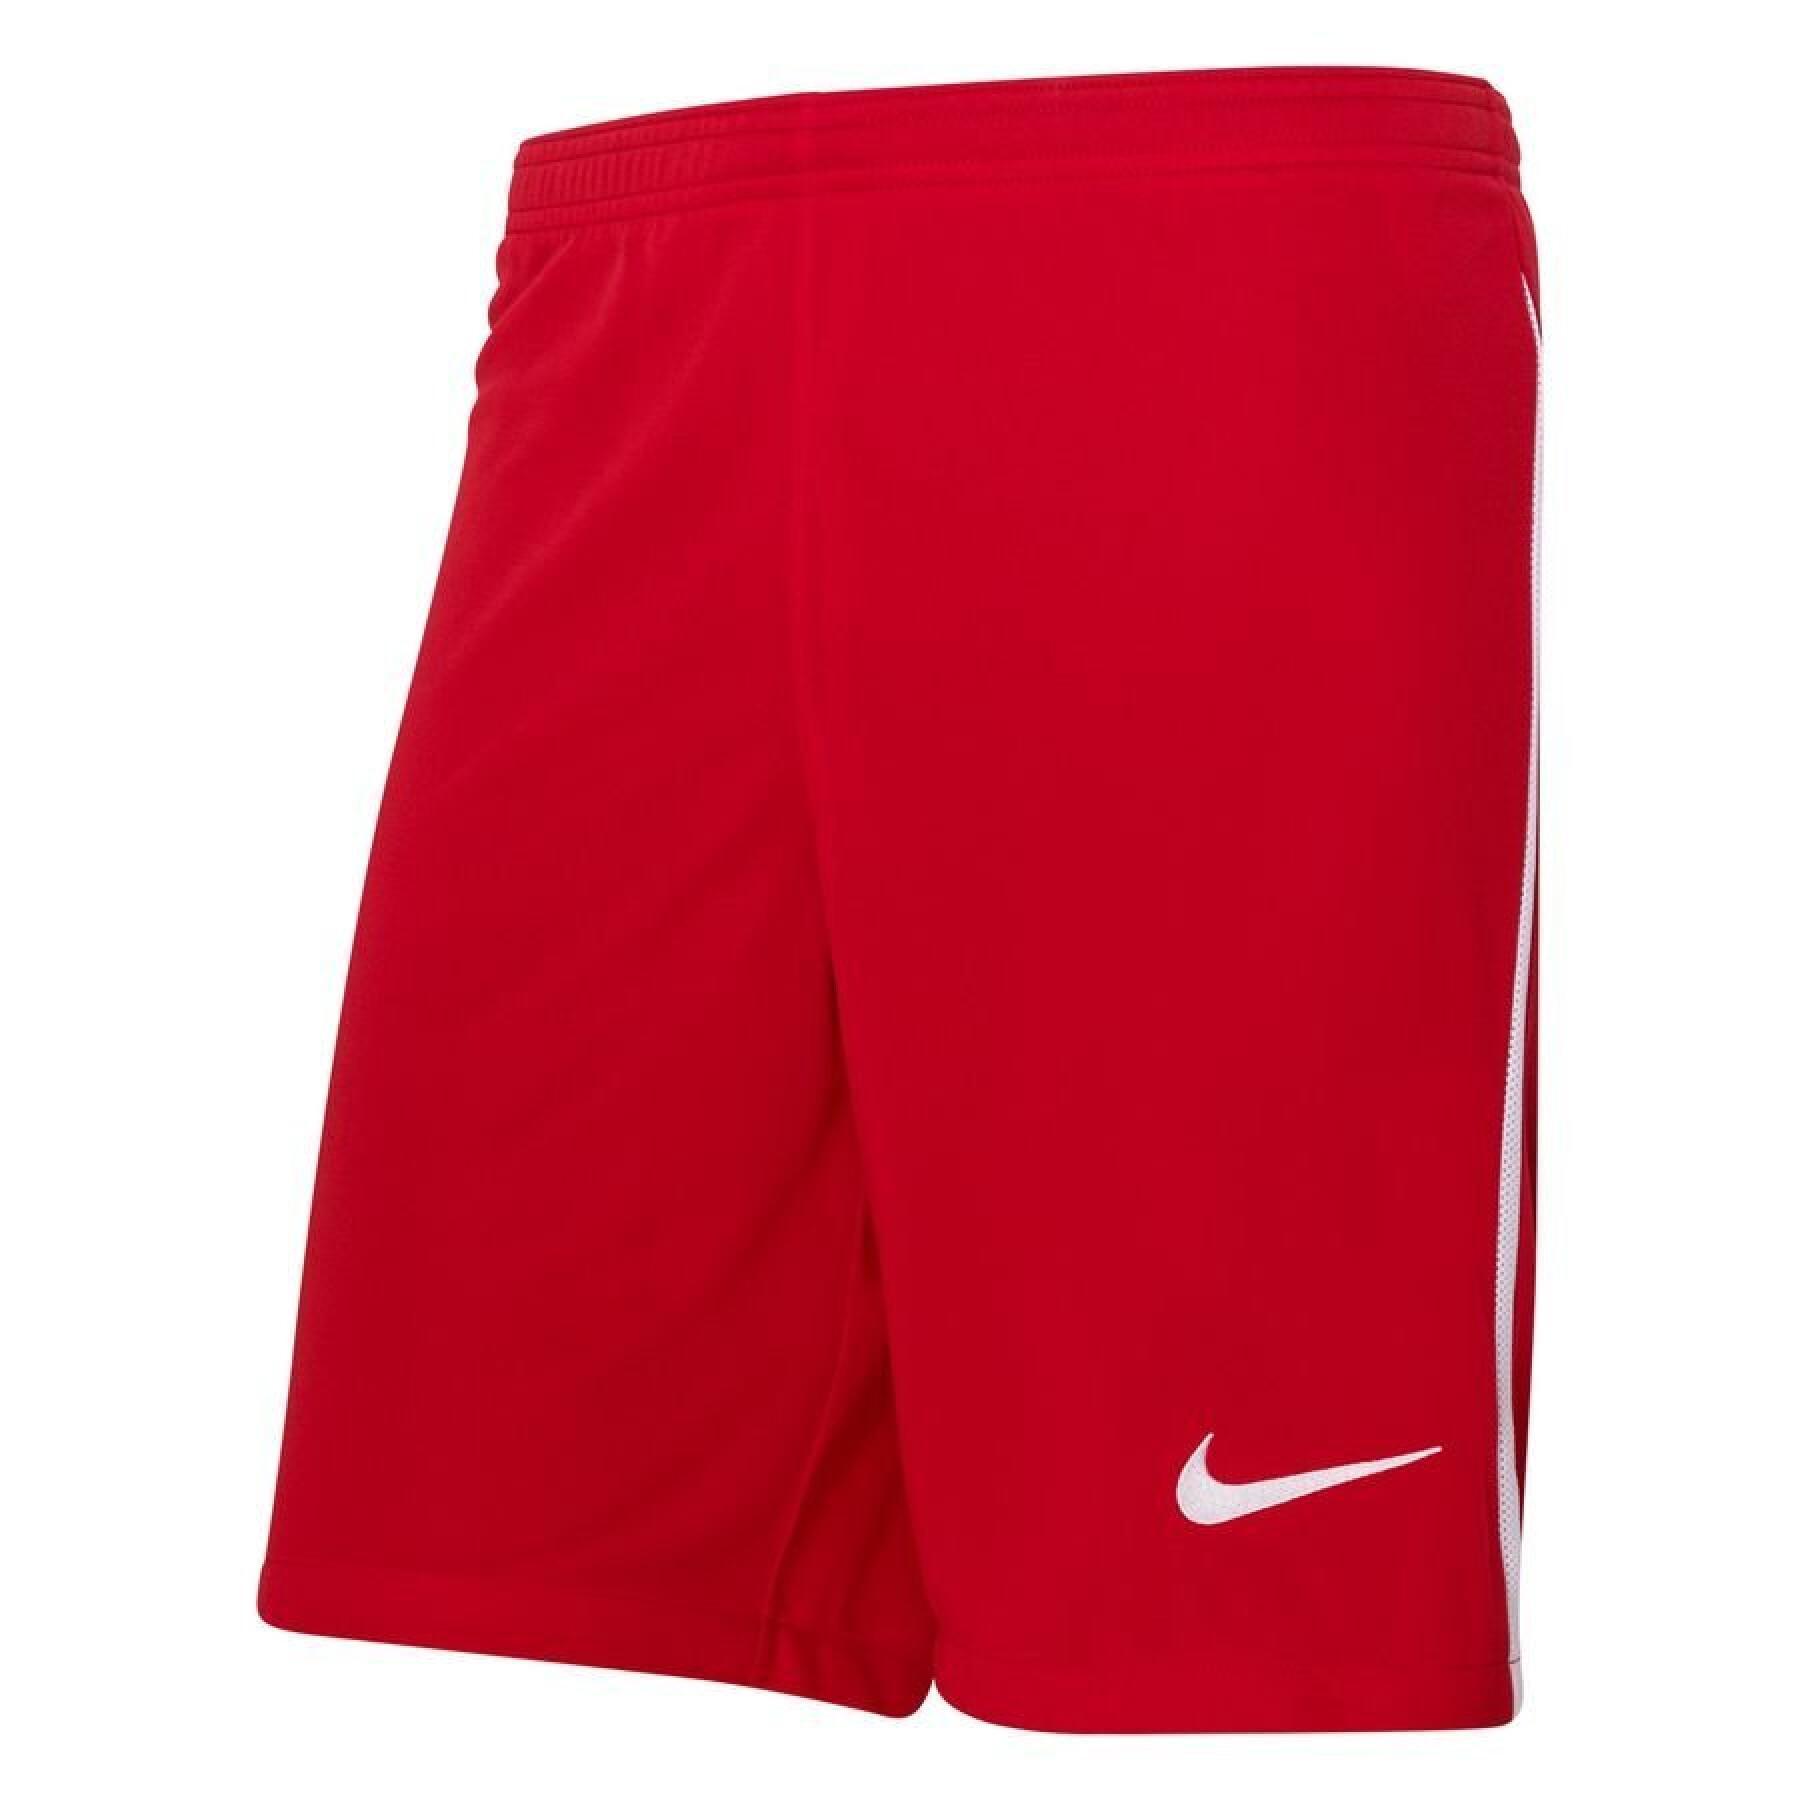 Mesh shorts Nike Dri-Fit LGE III